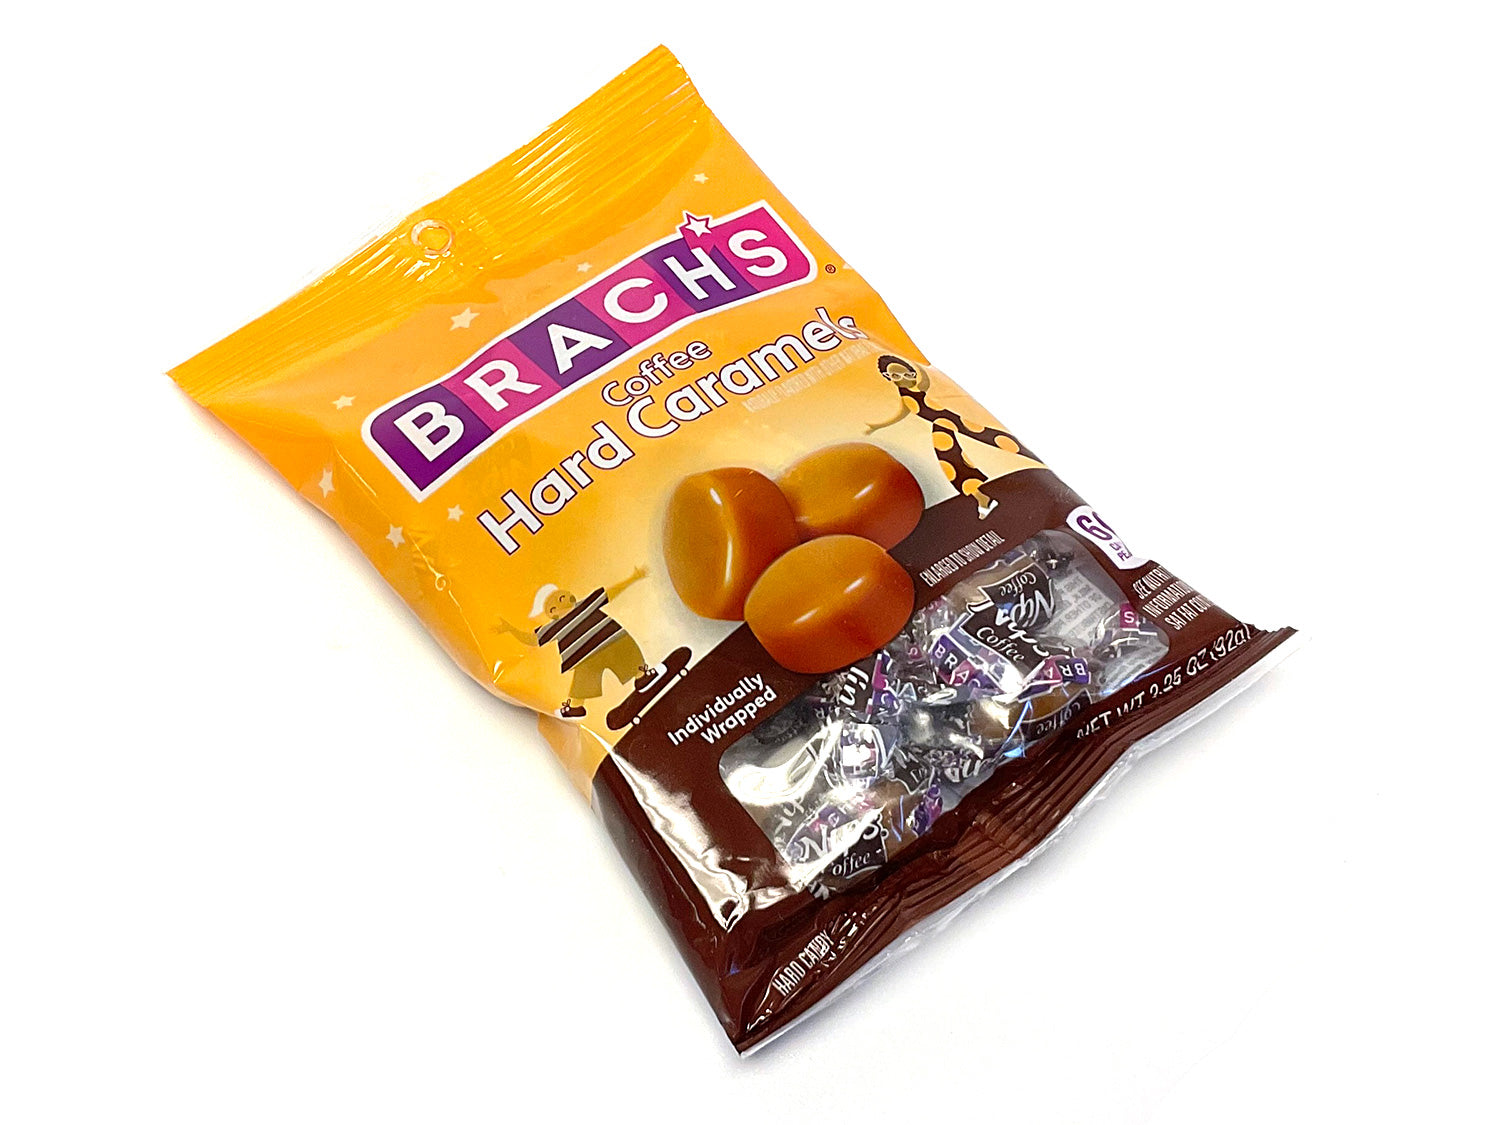 Brach's Nips Coffee Flavored Hard Candy, 3.25 ounce Bag(Pack of 4)